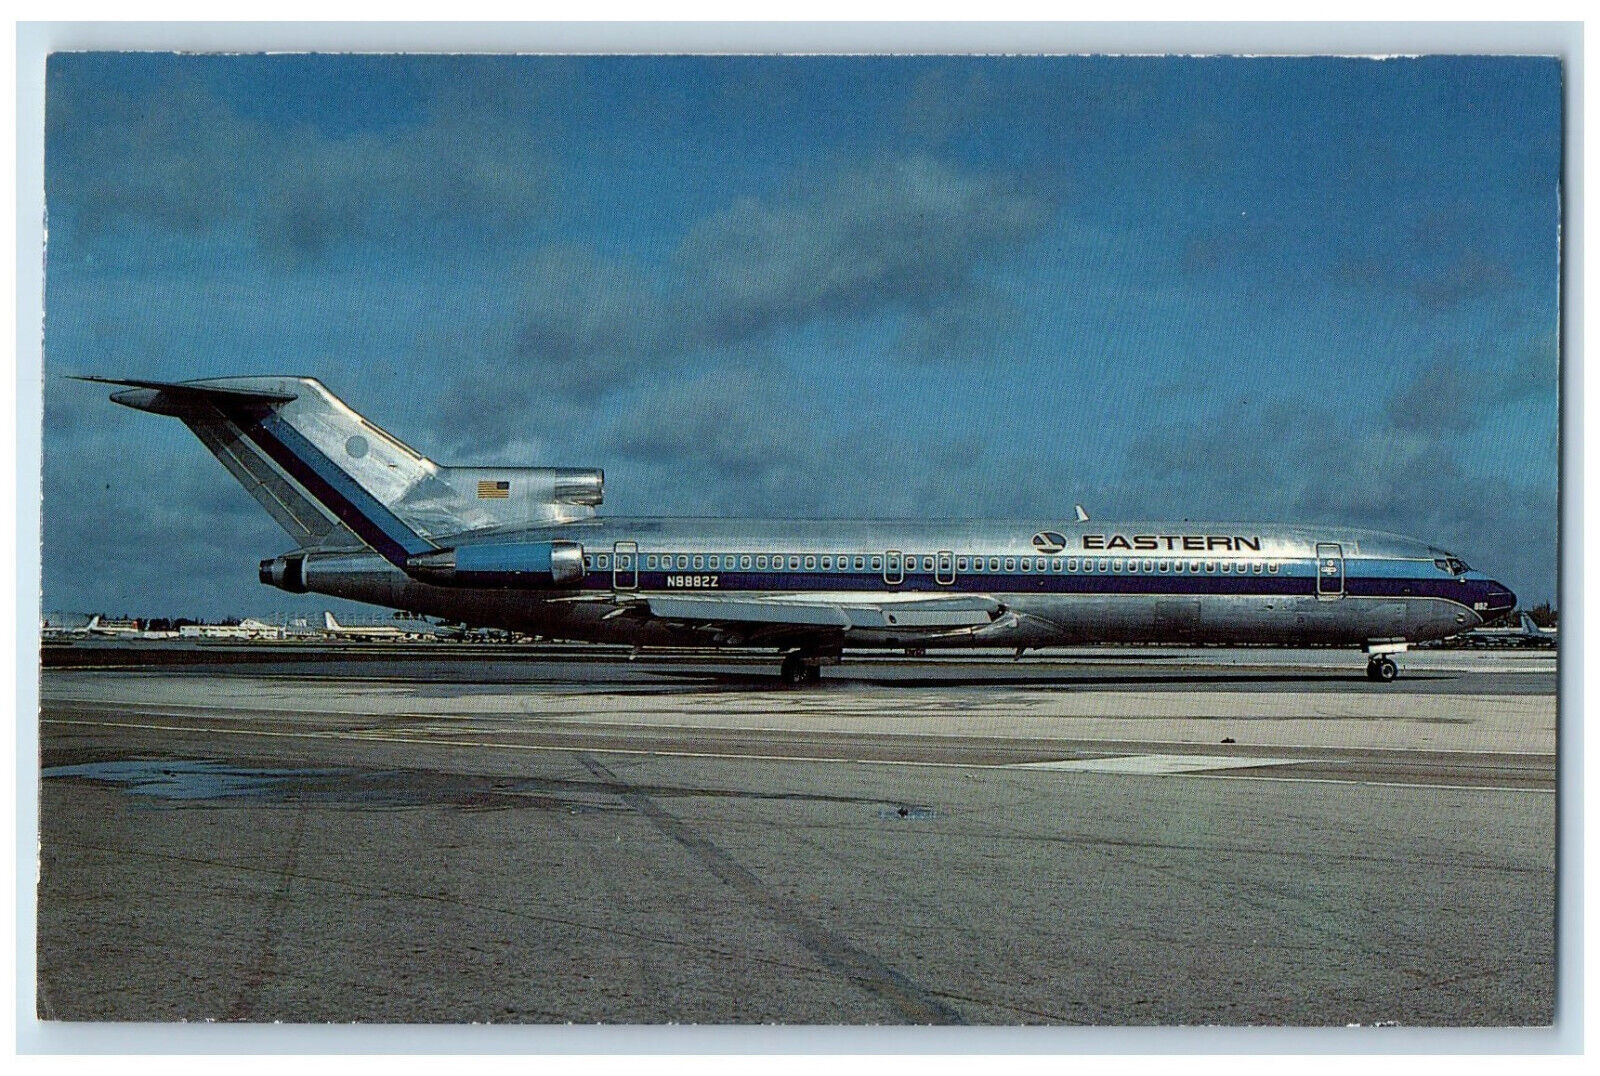 c1960s Eastern Airlines Boeing 727-225 Advanced Airplane N8882Z Postcard